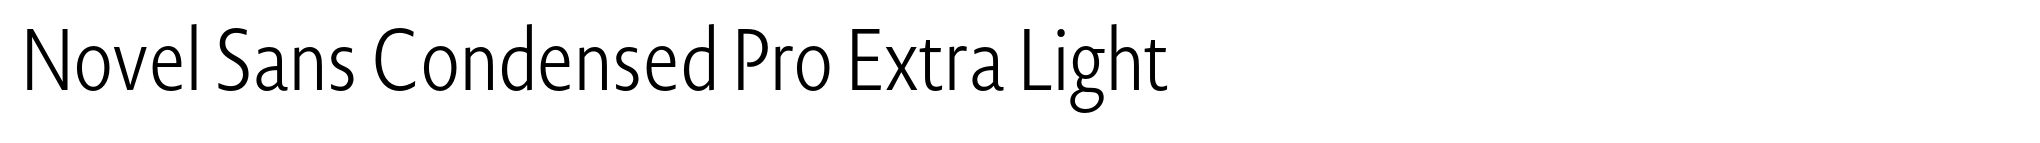 Novel Sans Condensed Pro Extra Light image